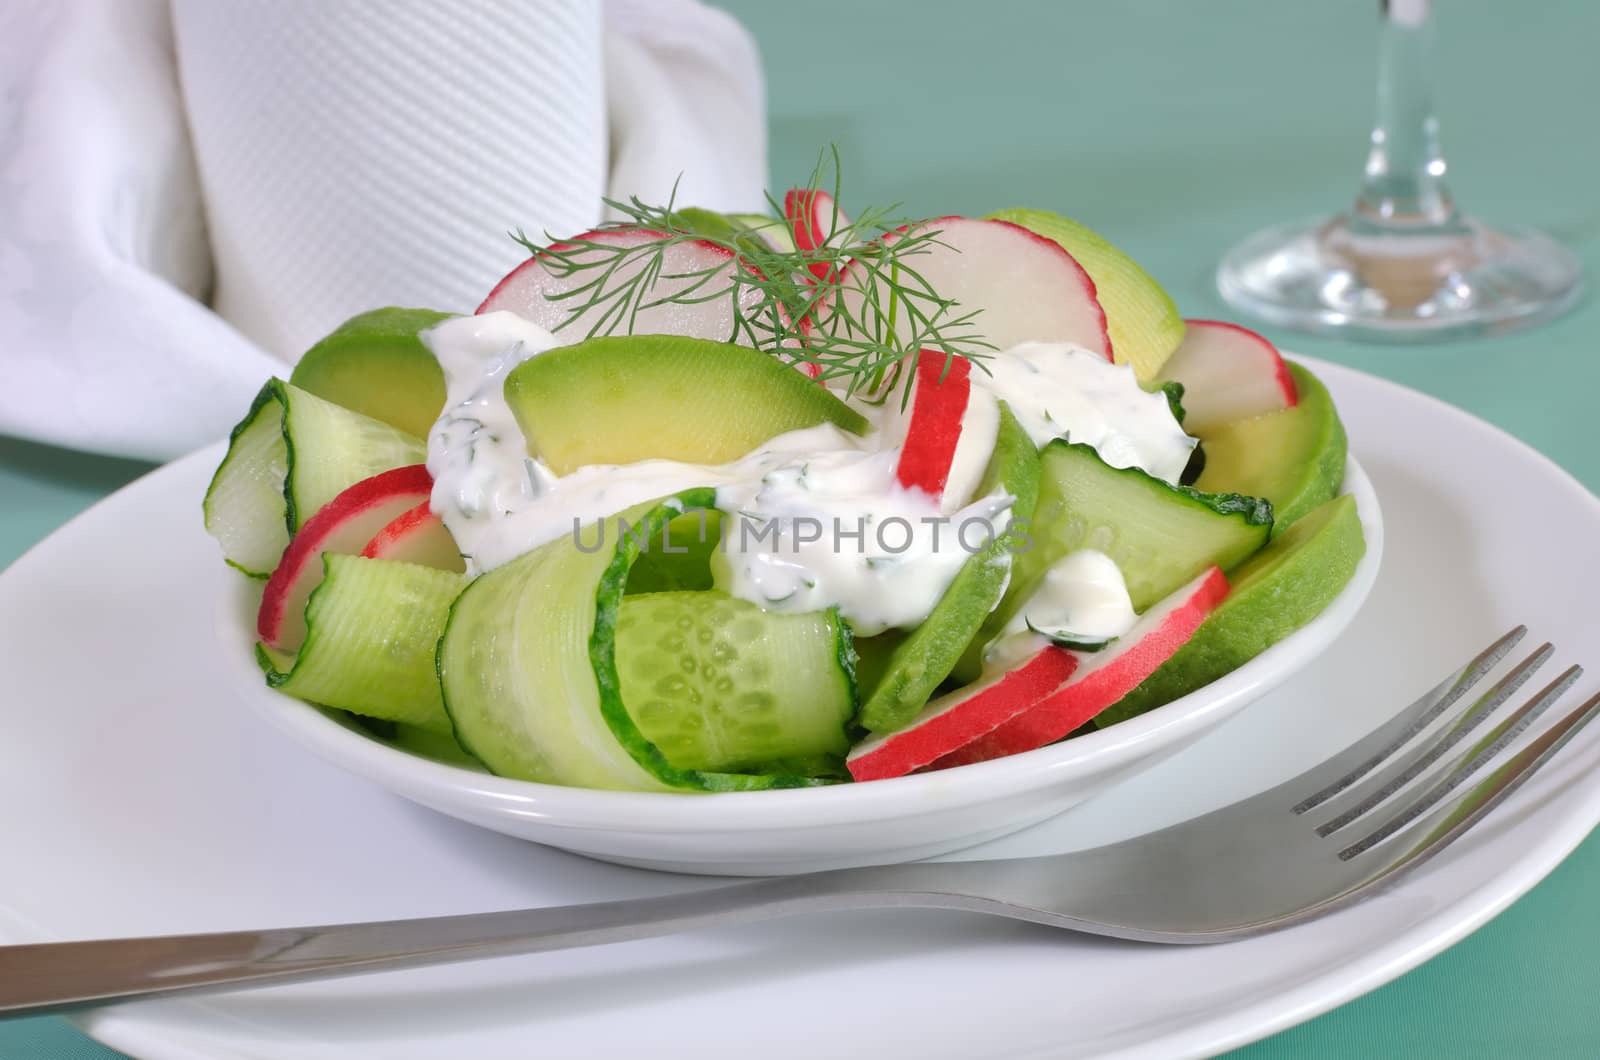 Cucumber salad with radish and avocado cream sauce and dill